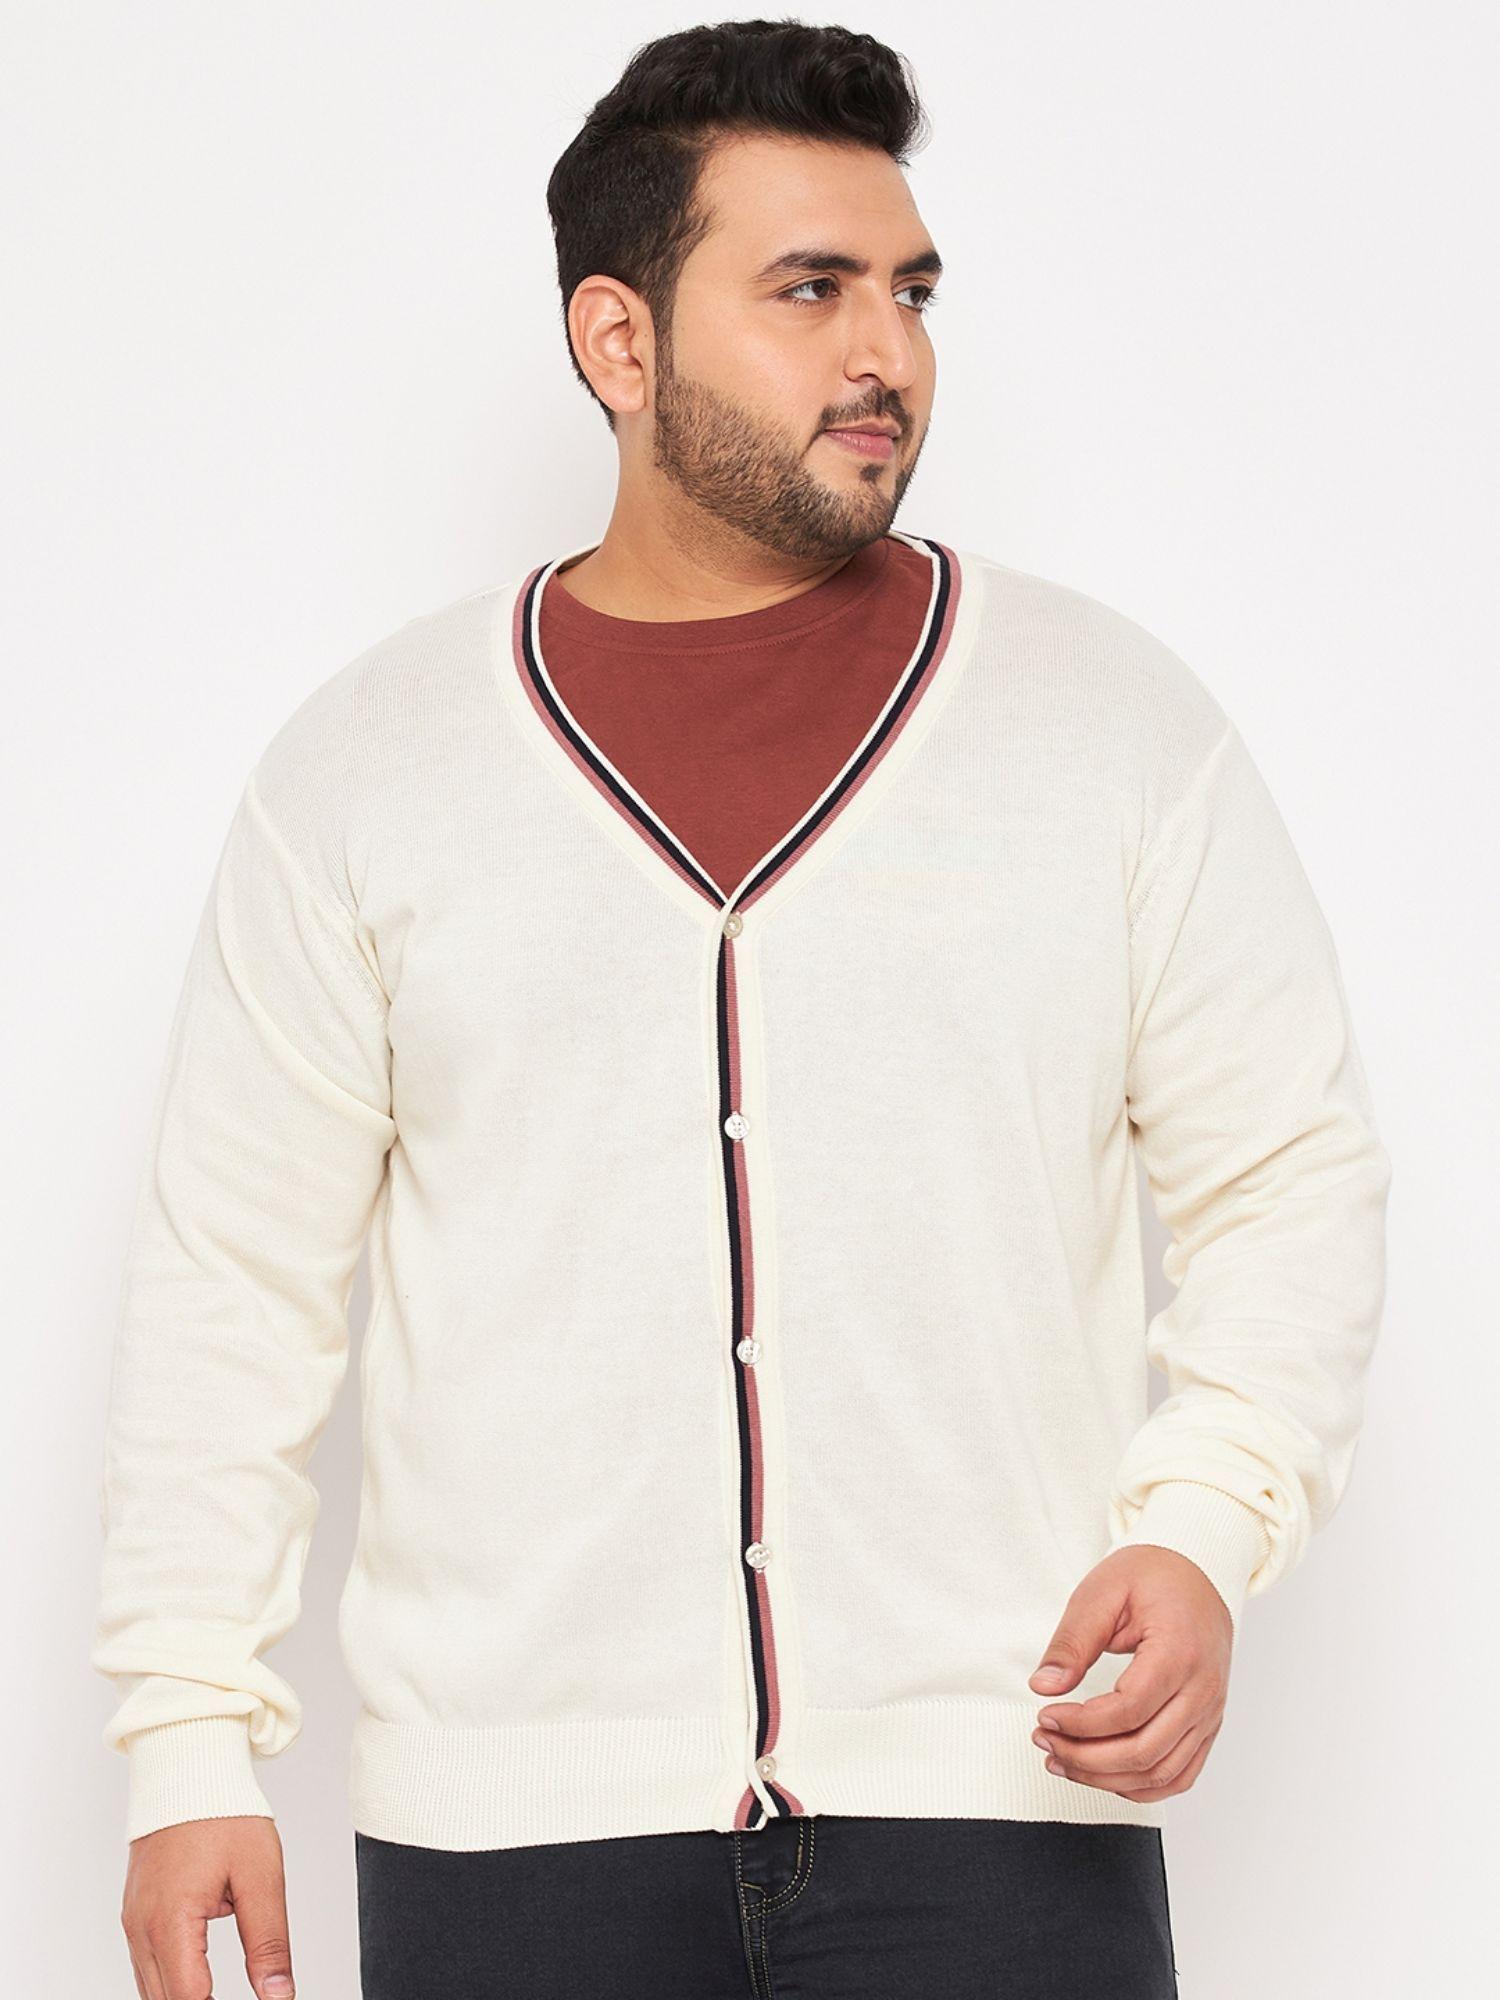 off-white-v-neck-plus-size-sweater